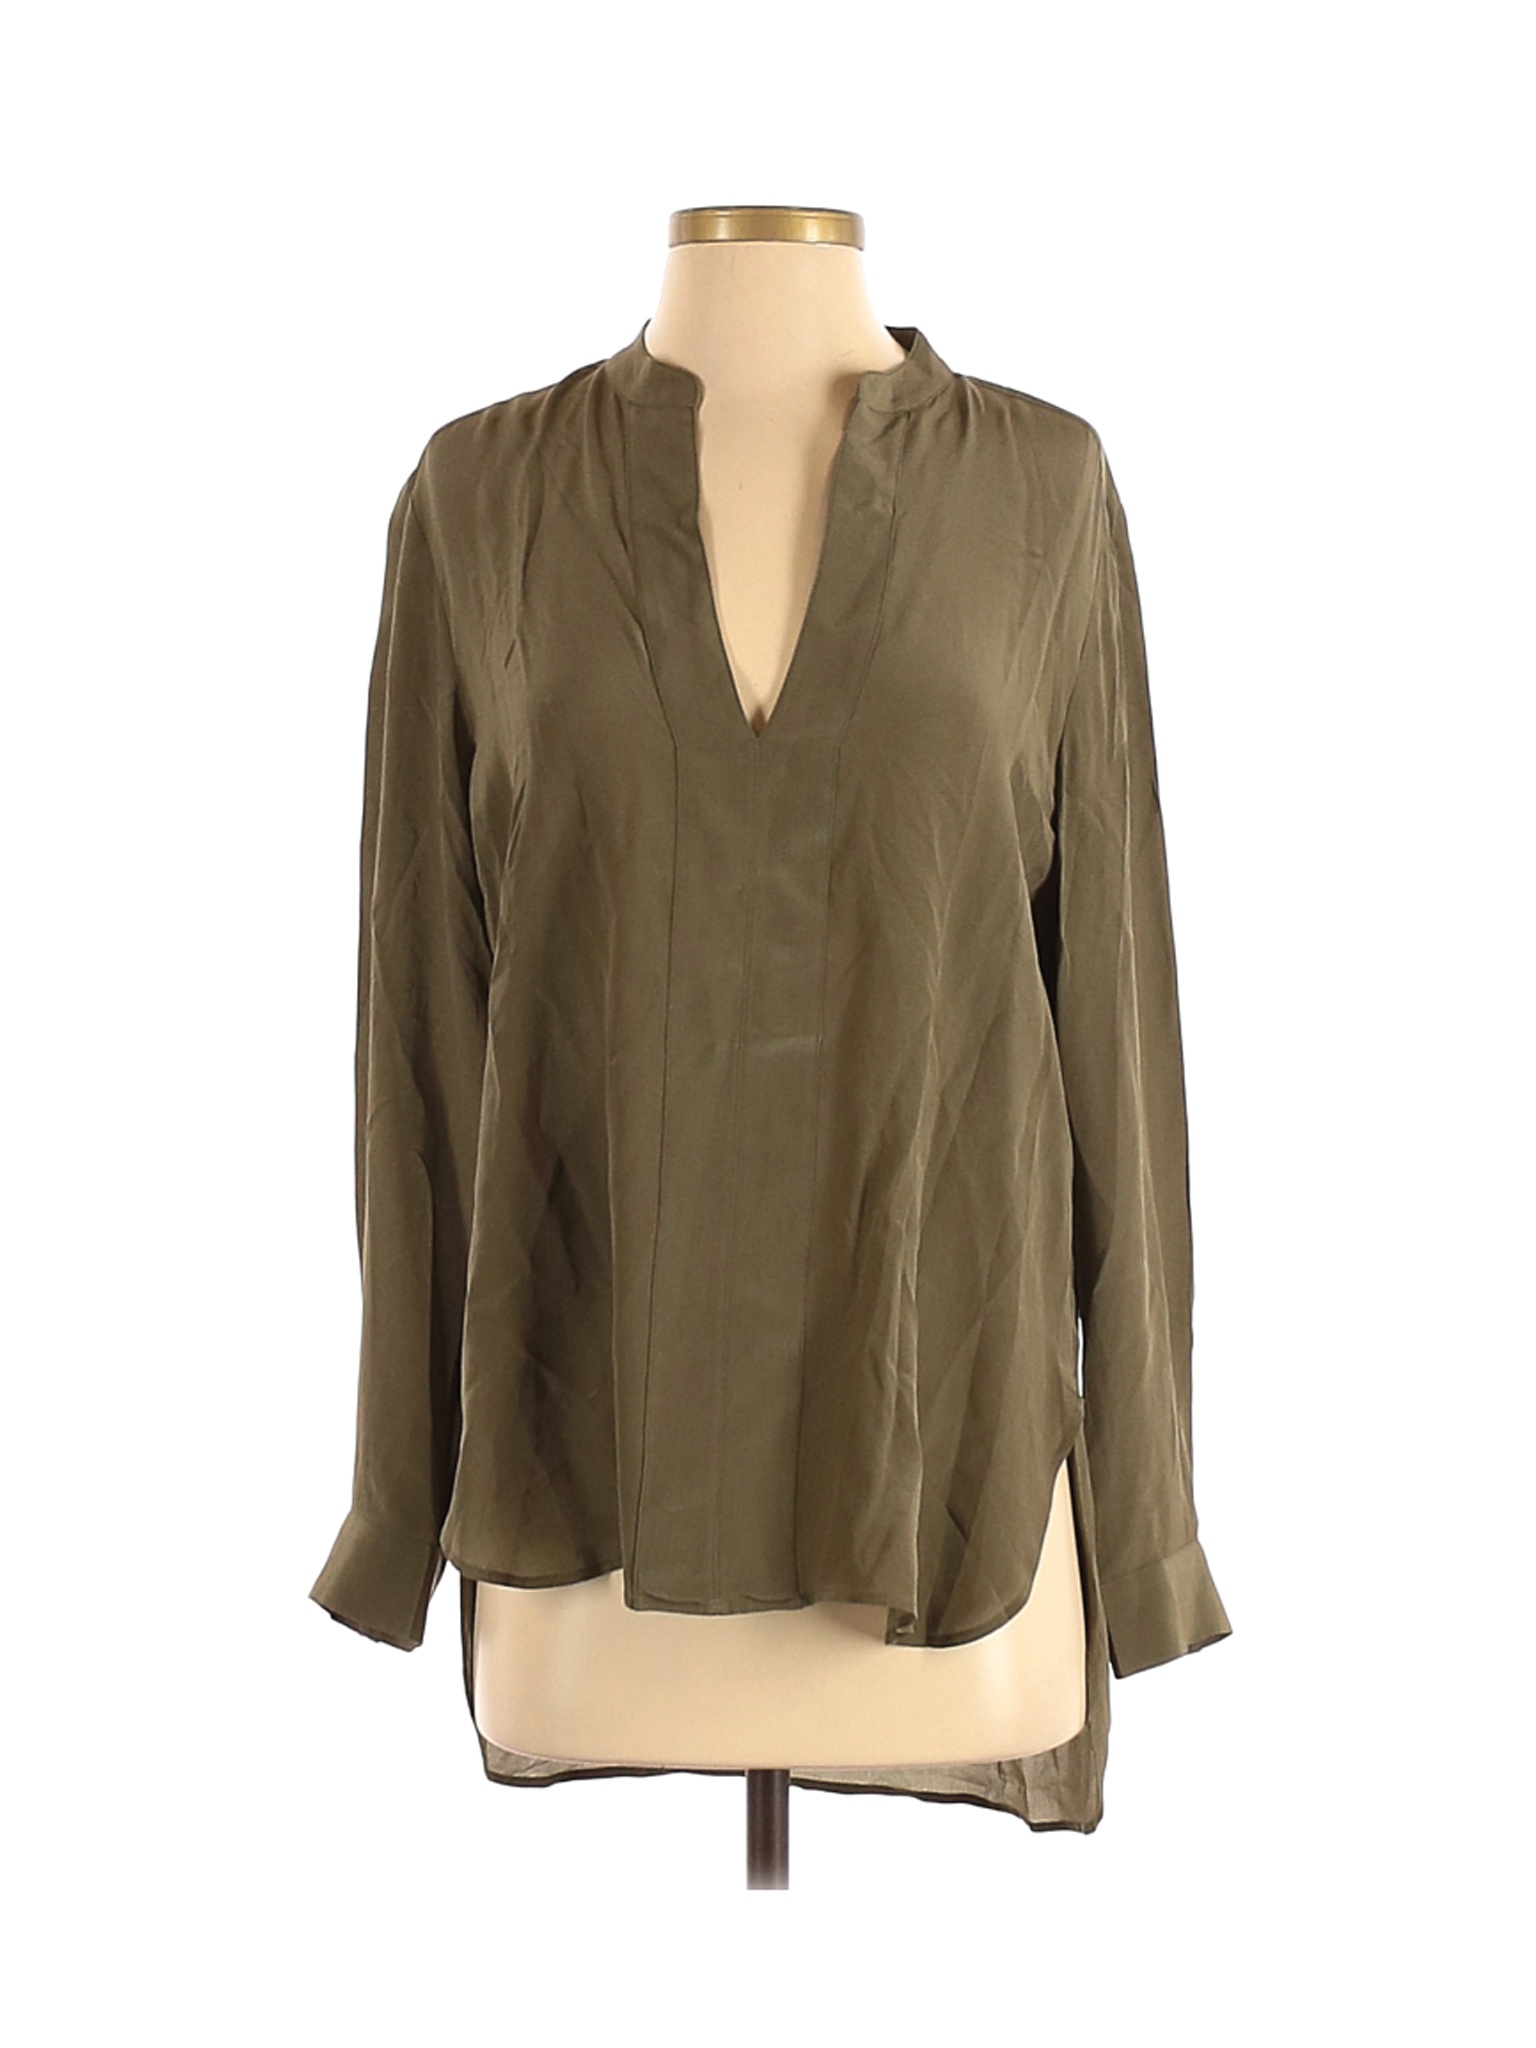 Banana Republic Women Green Long Sleeve Silk Top S | eBay